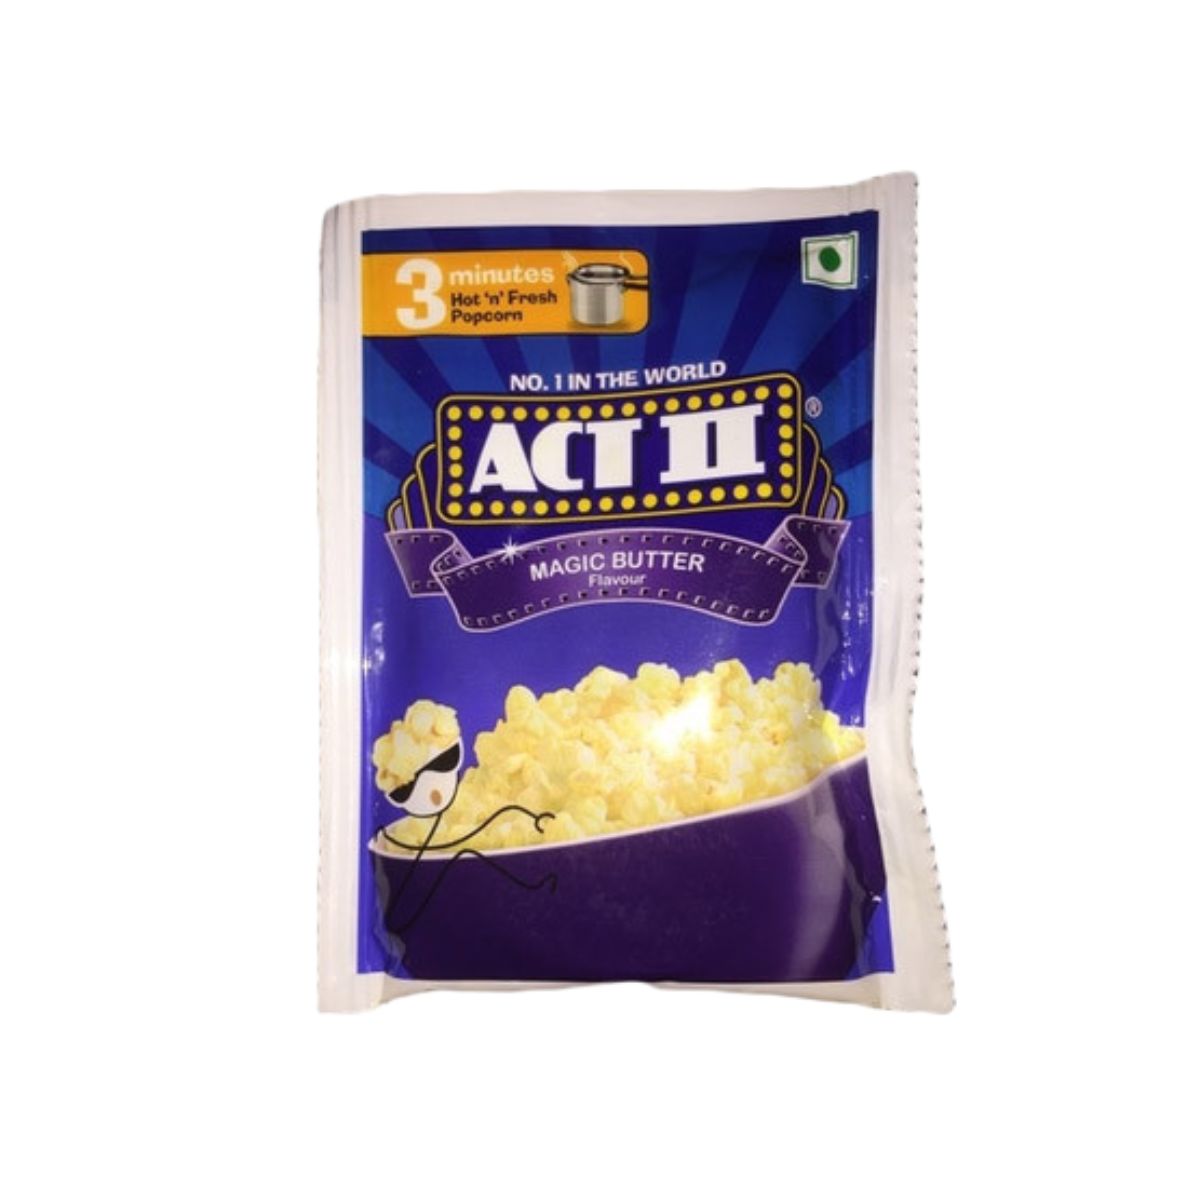 Act II Hot & Fresh Popcorn - Magic Butter - 44g